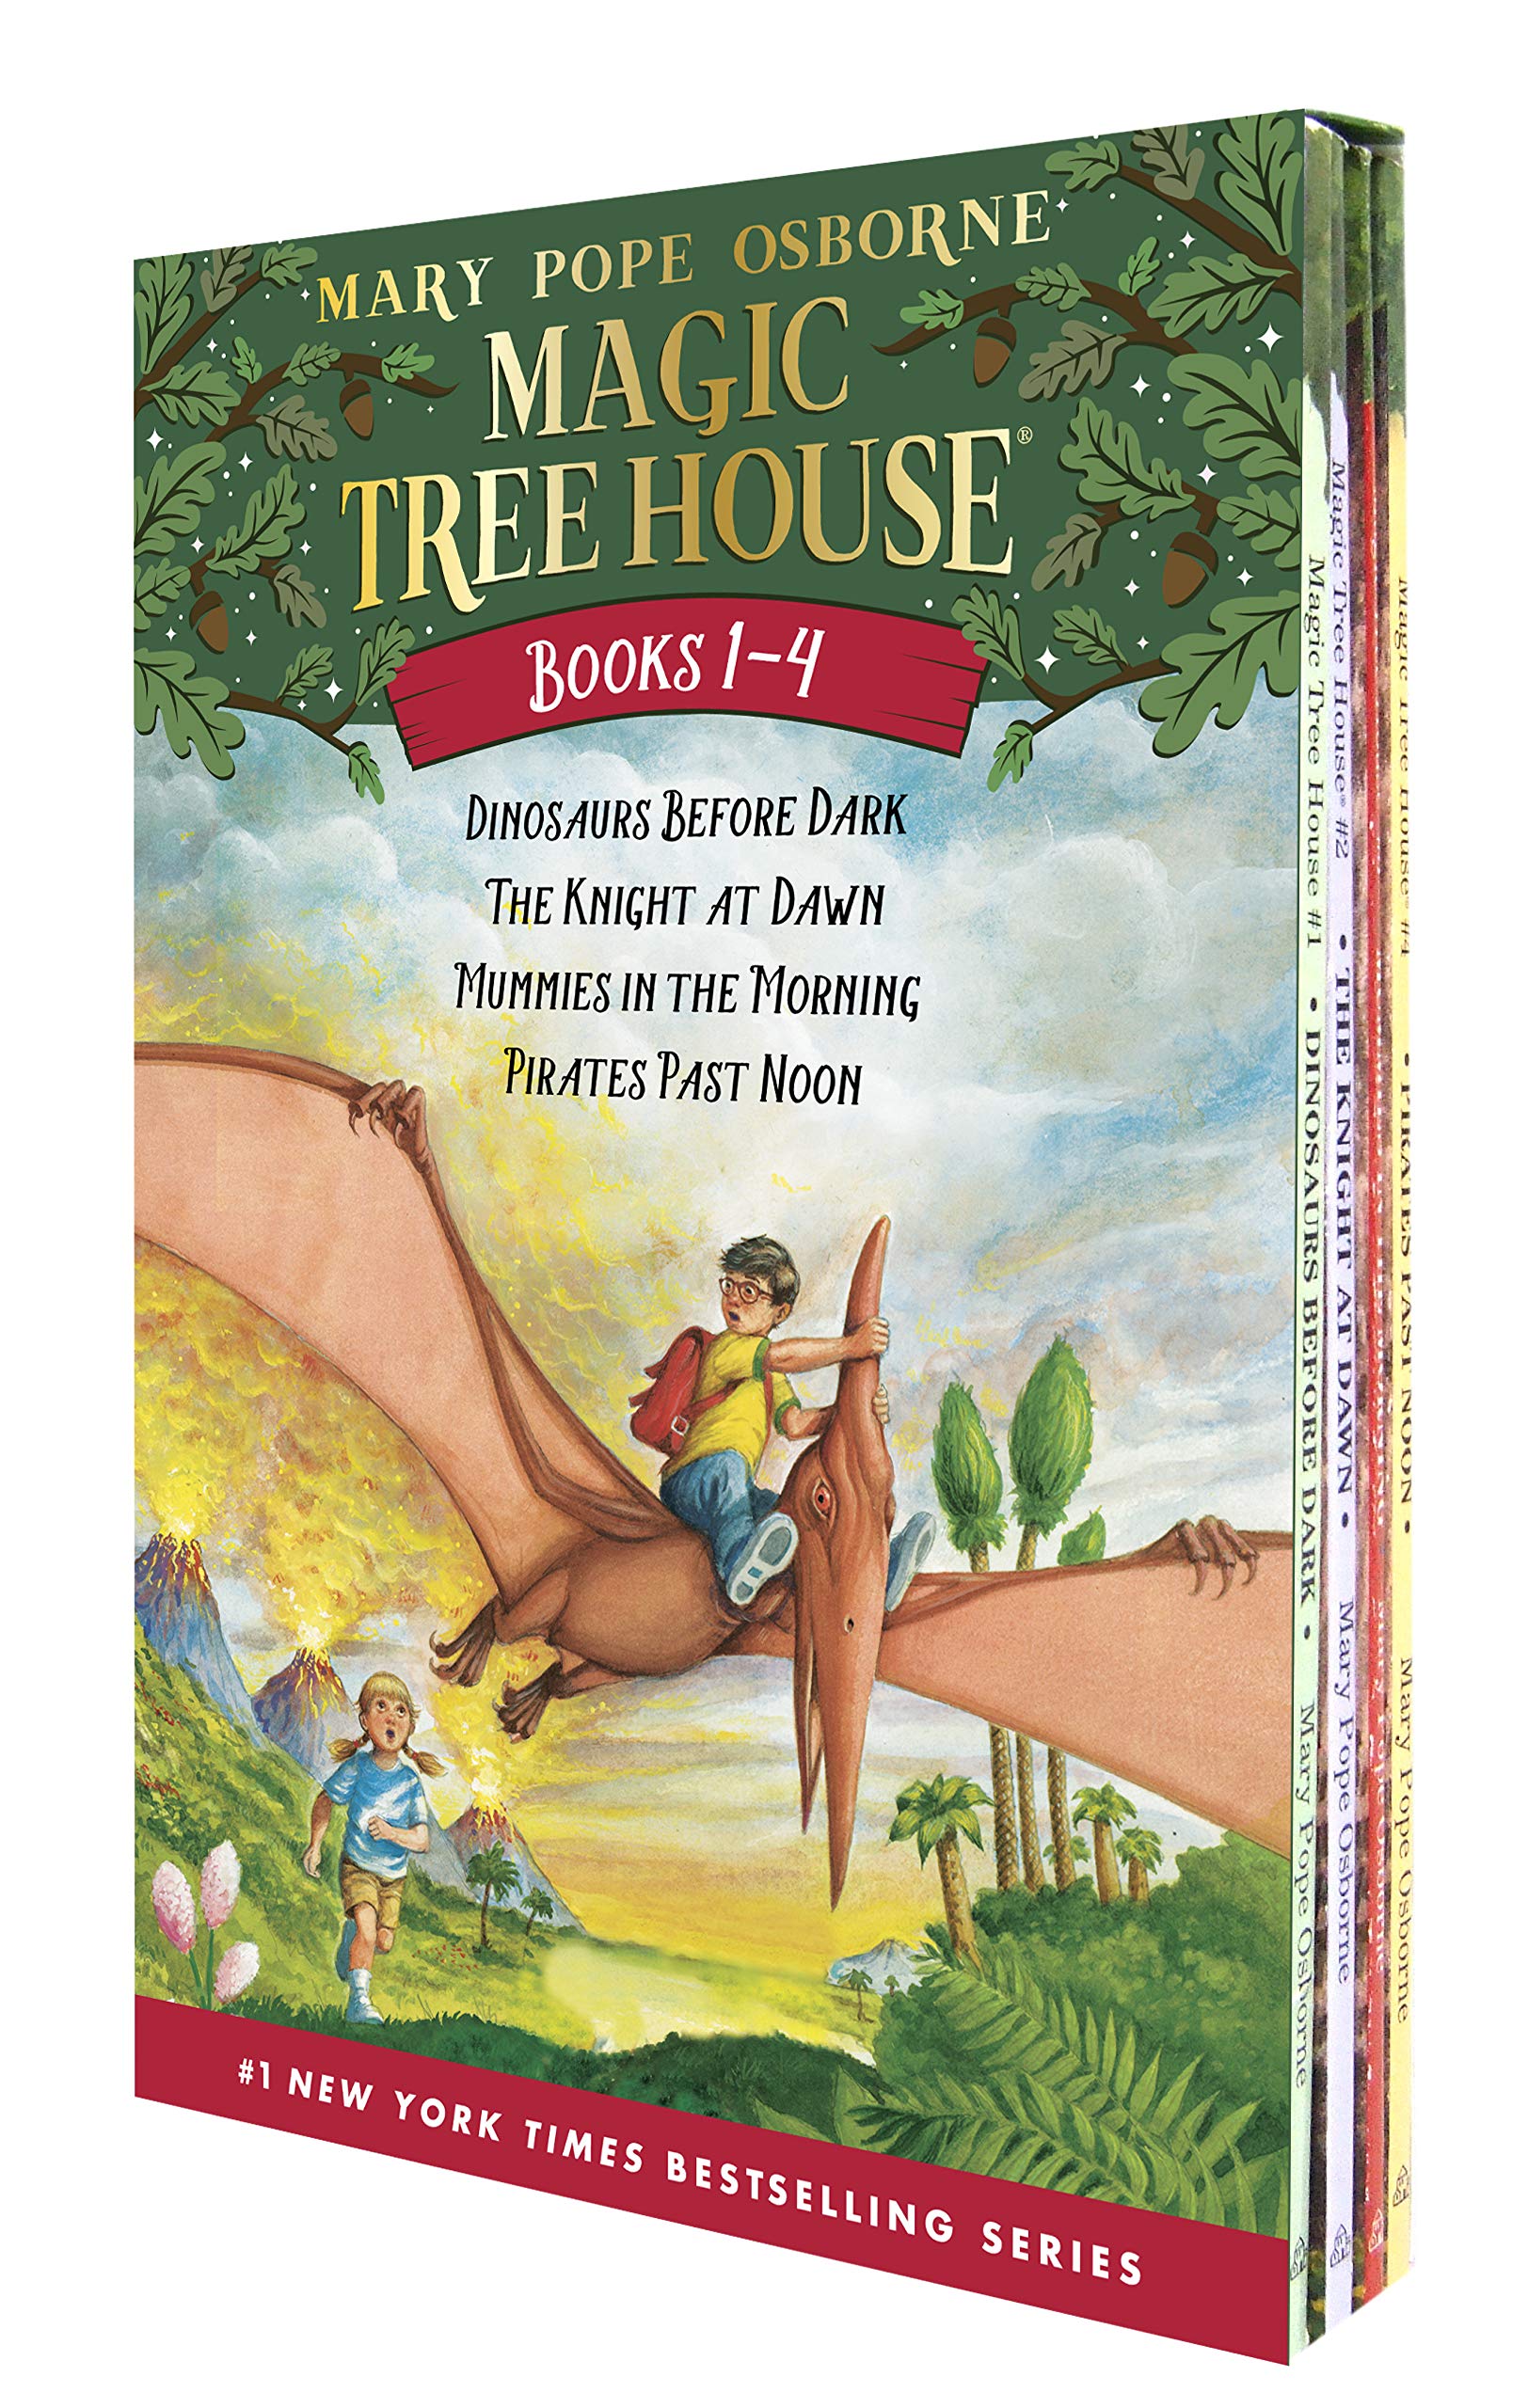 Magic Tree House Boxed Book Set $8.96